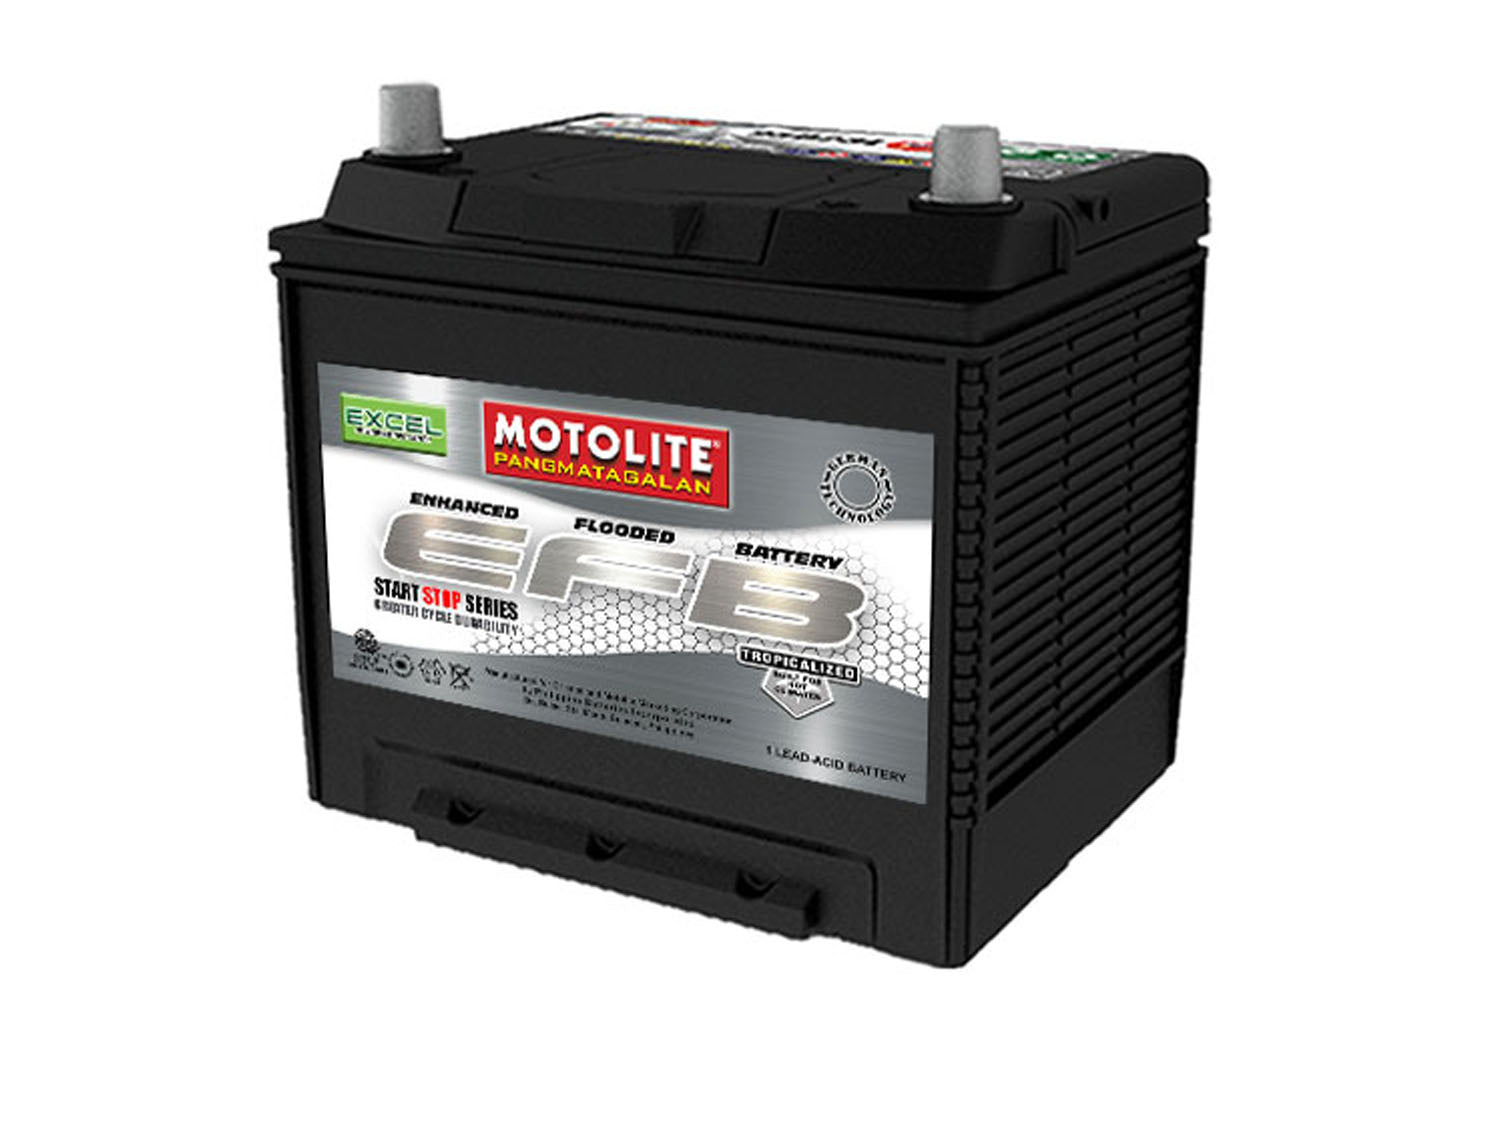 Motolite Excel EFB Battery, Price, Buy Online - Car Battery for Sale